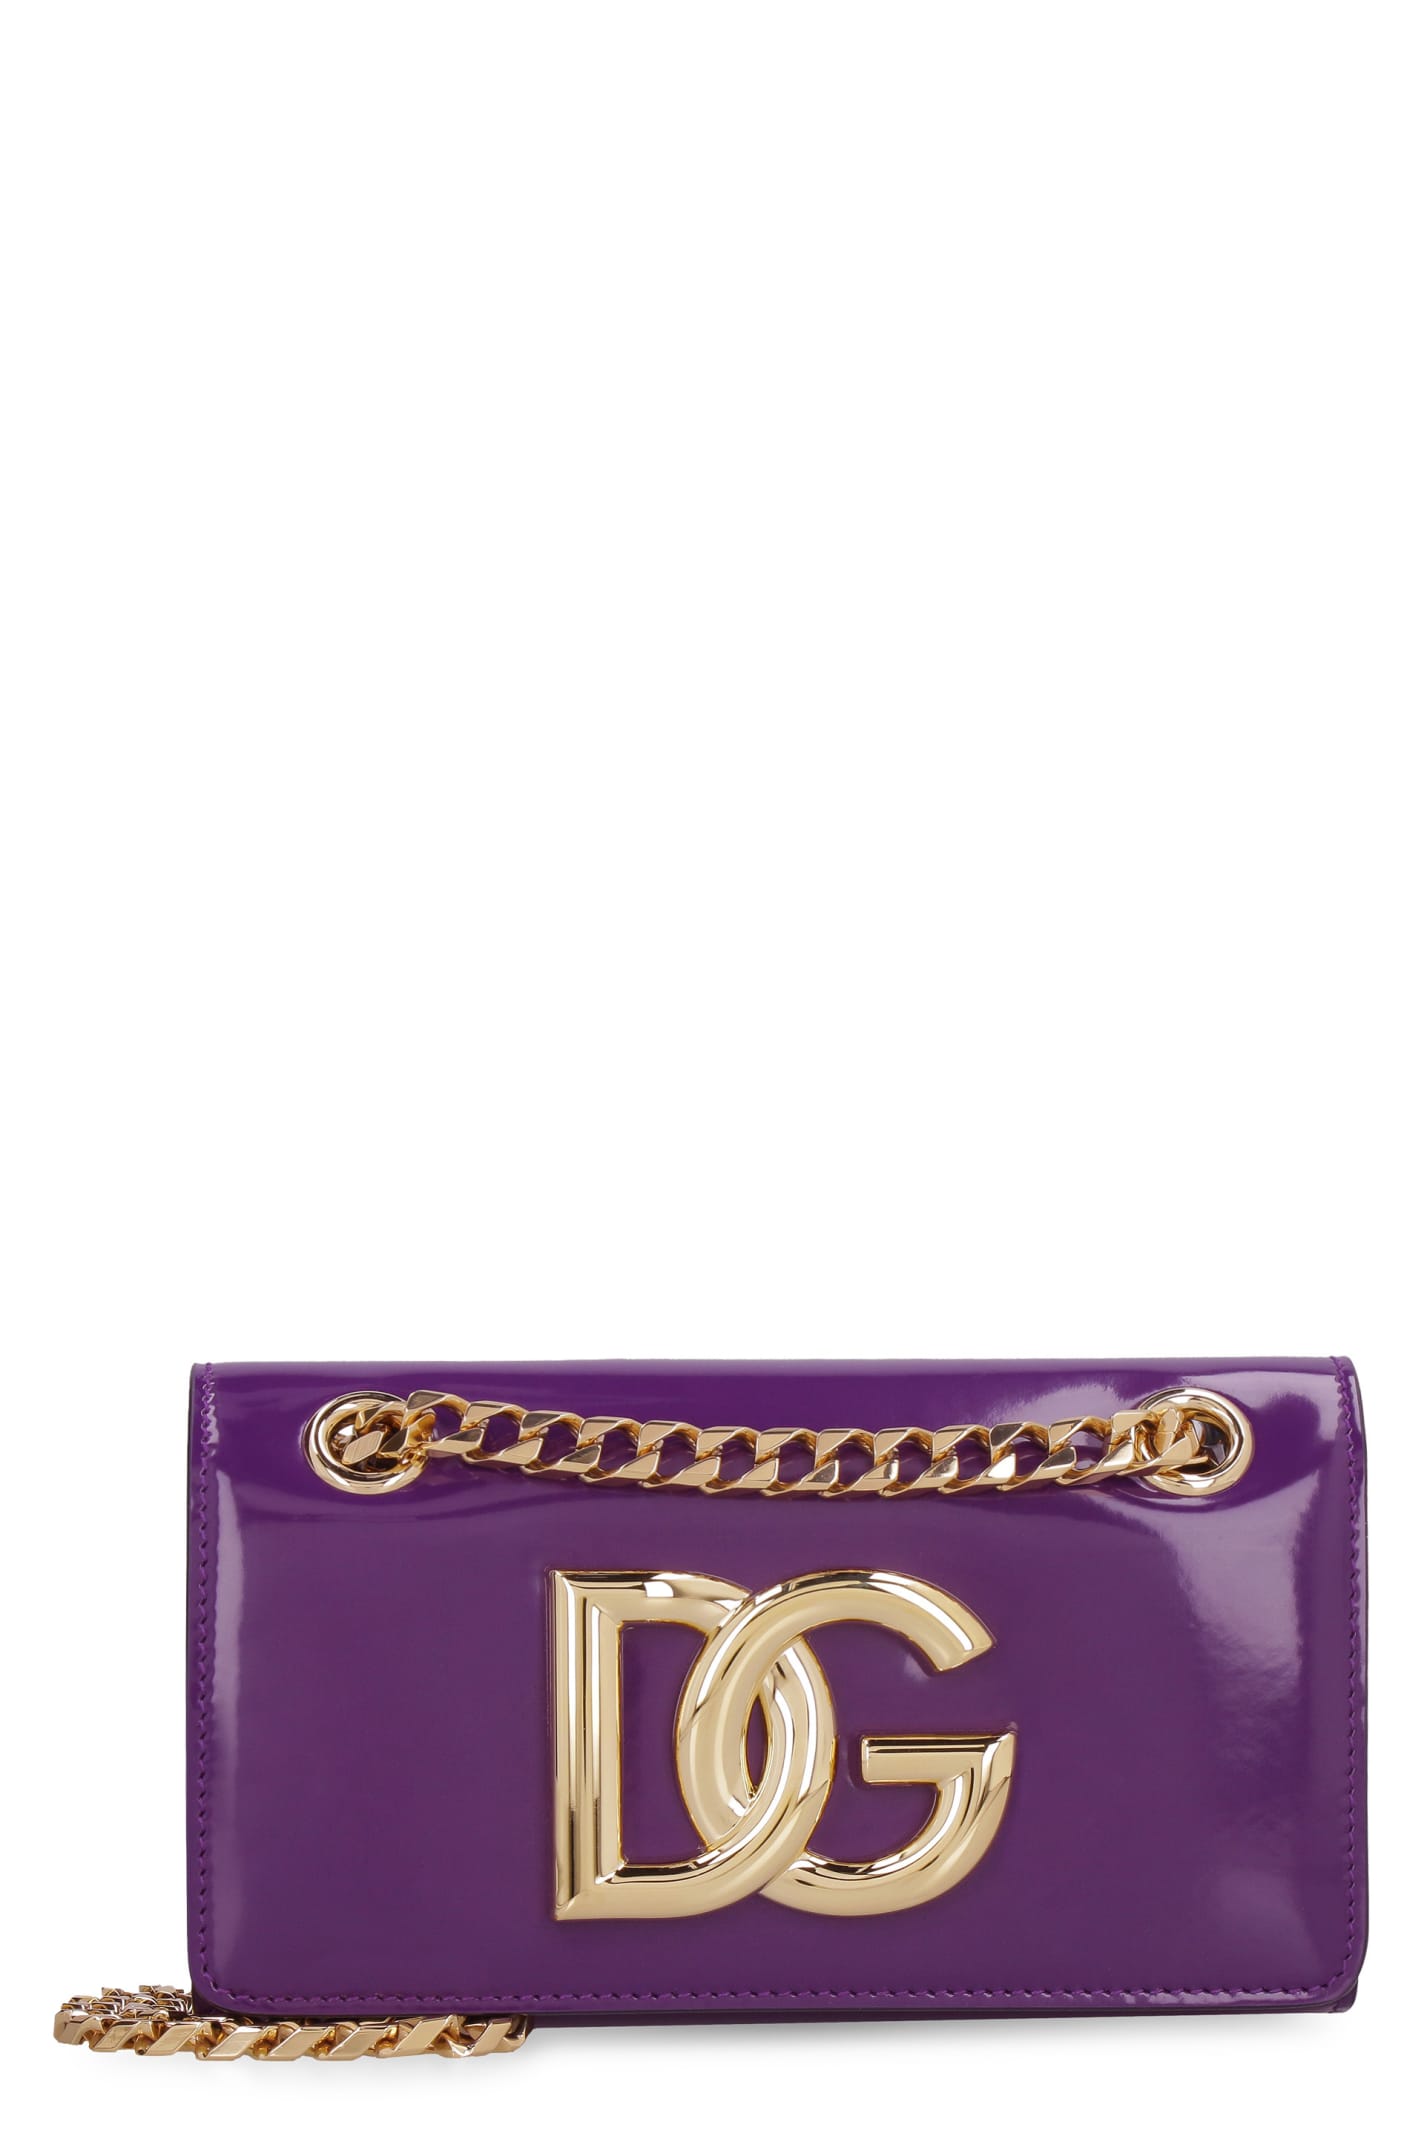 Dolce & Gabbana Calfskin Leather Mobile Phone Case In Purple